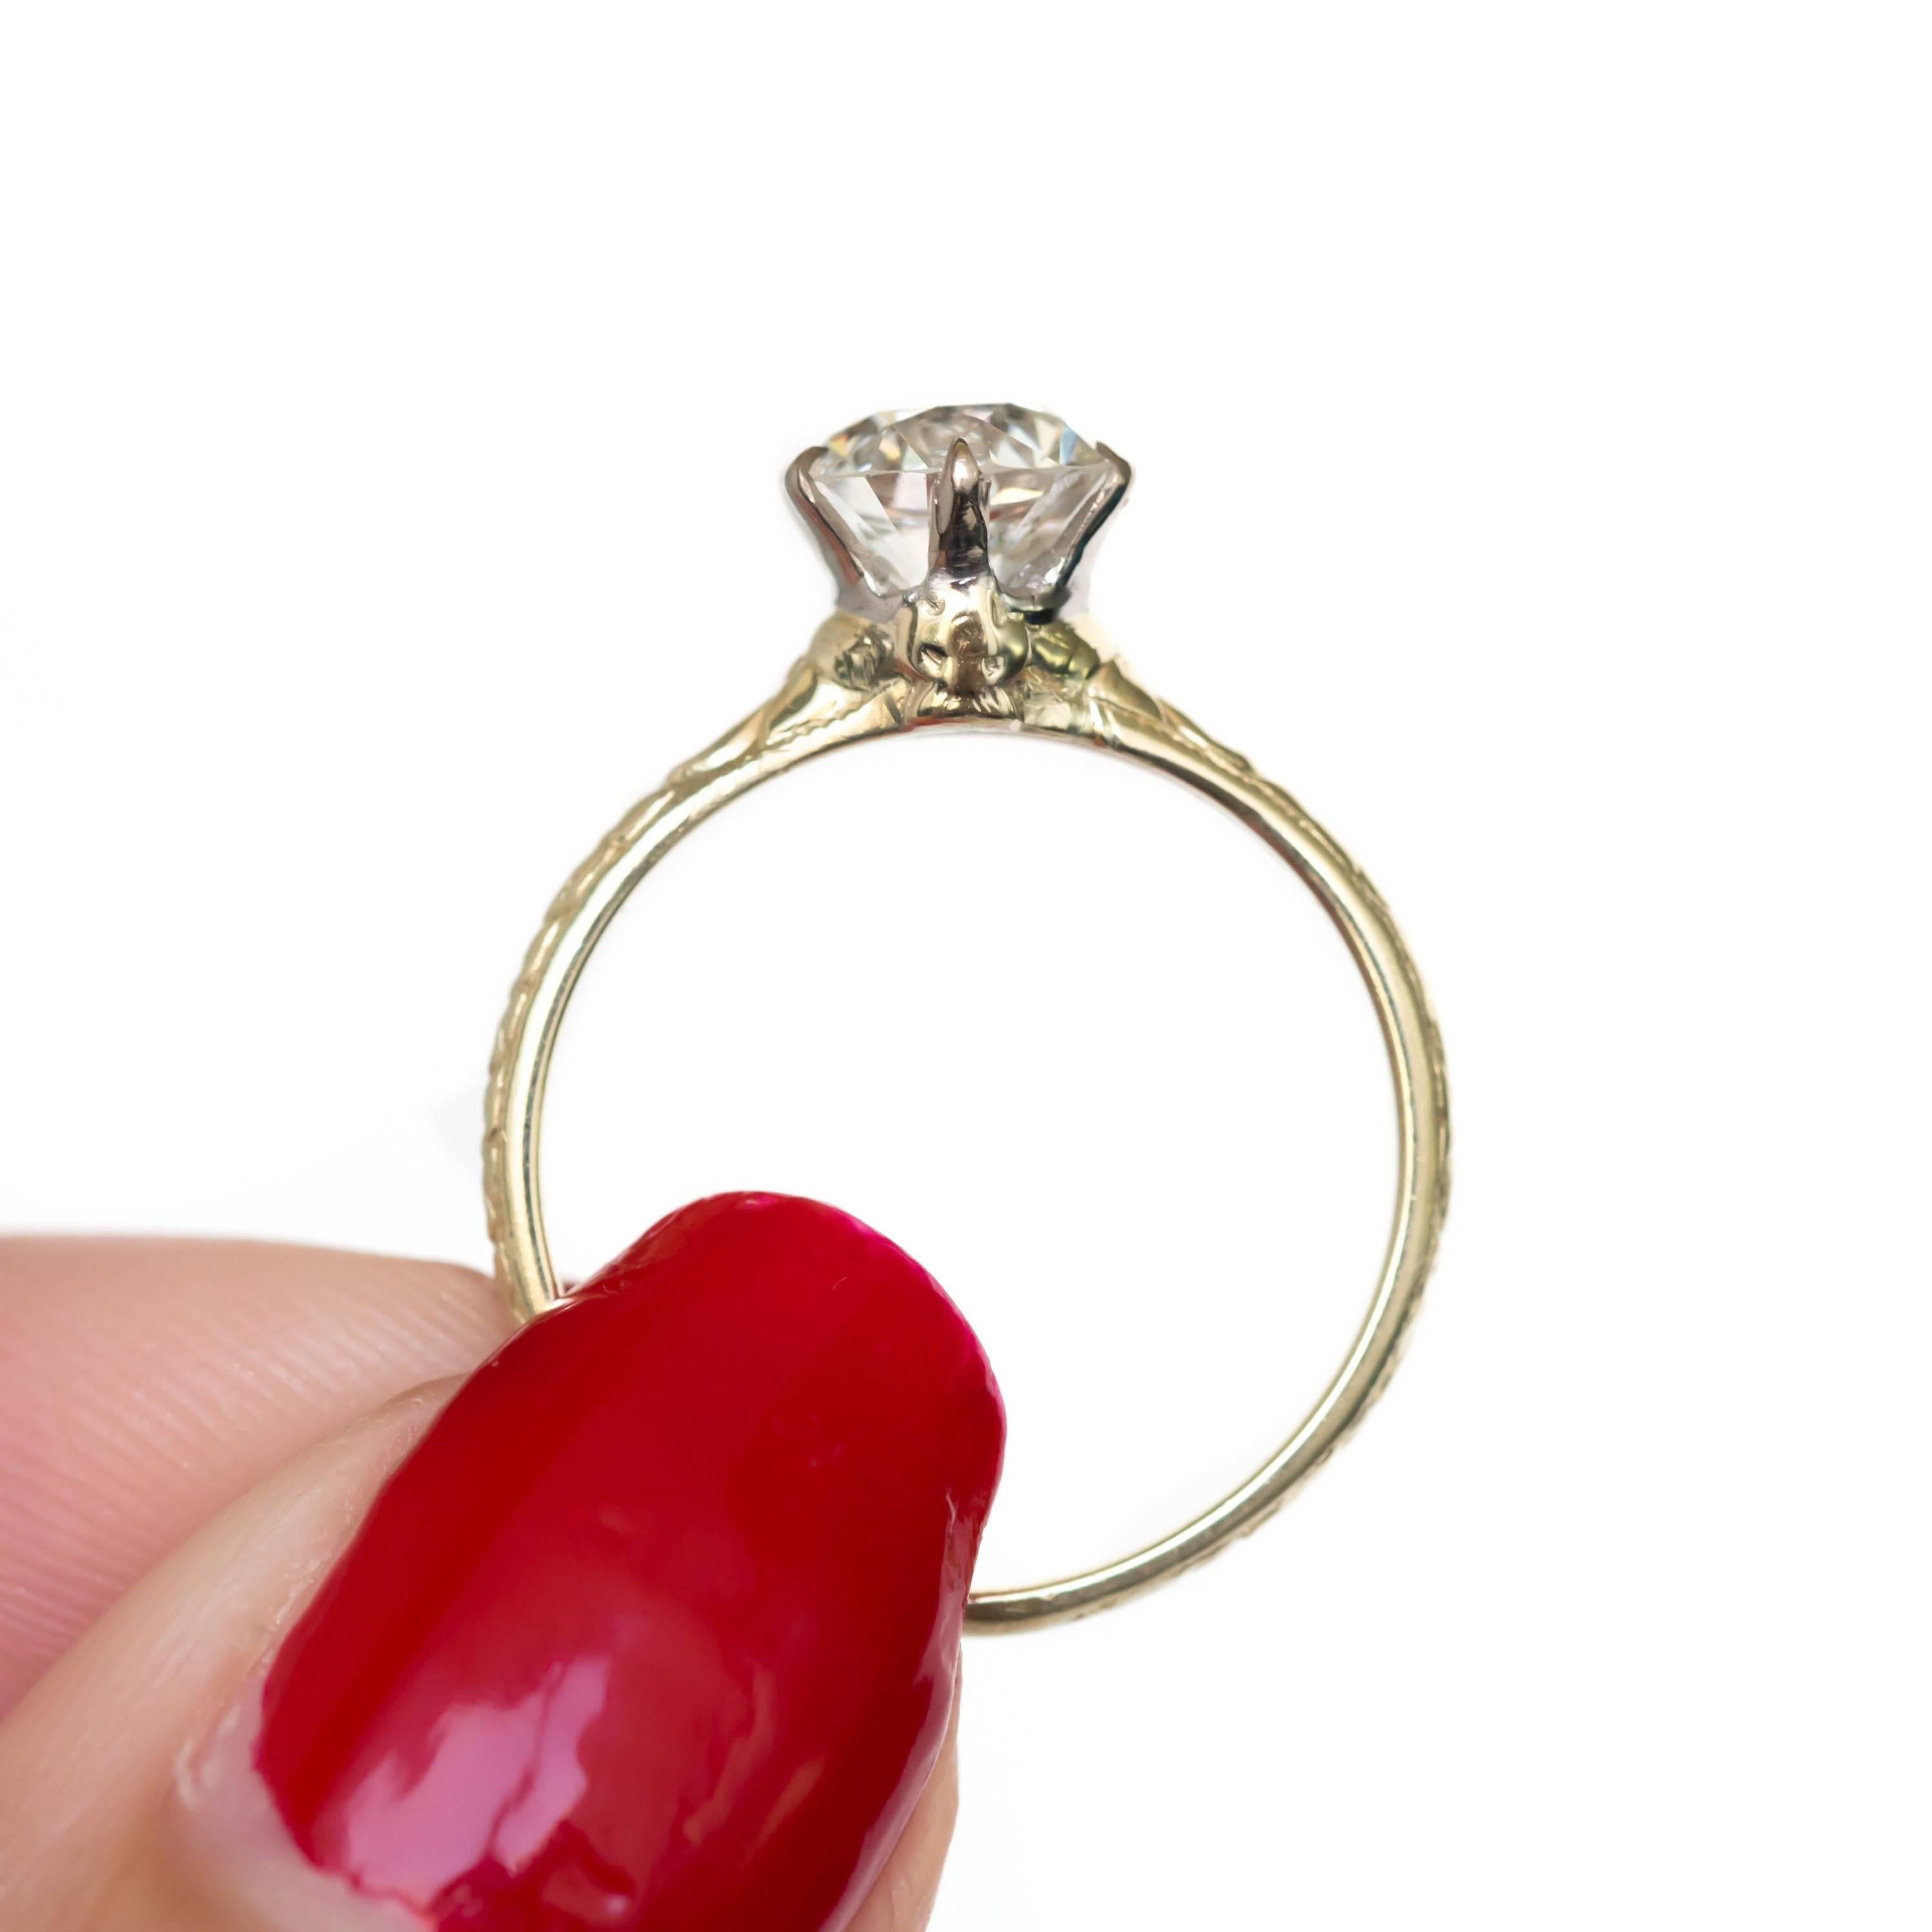 1.11 carat diamond ring